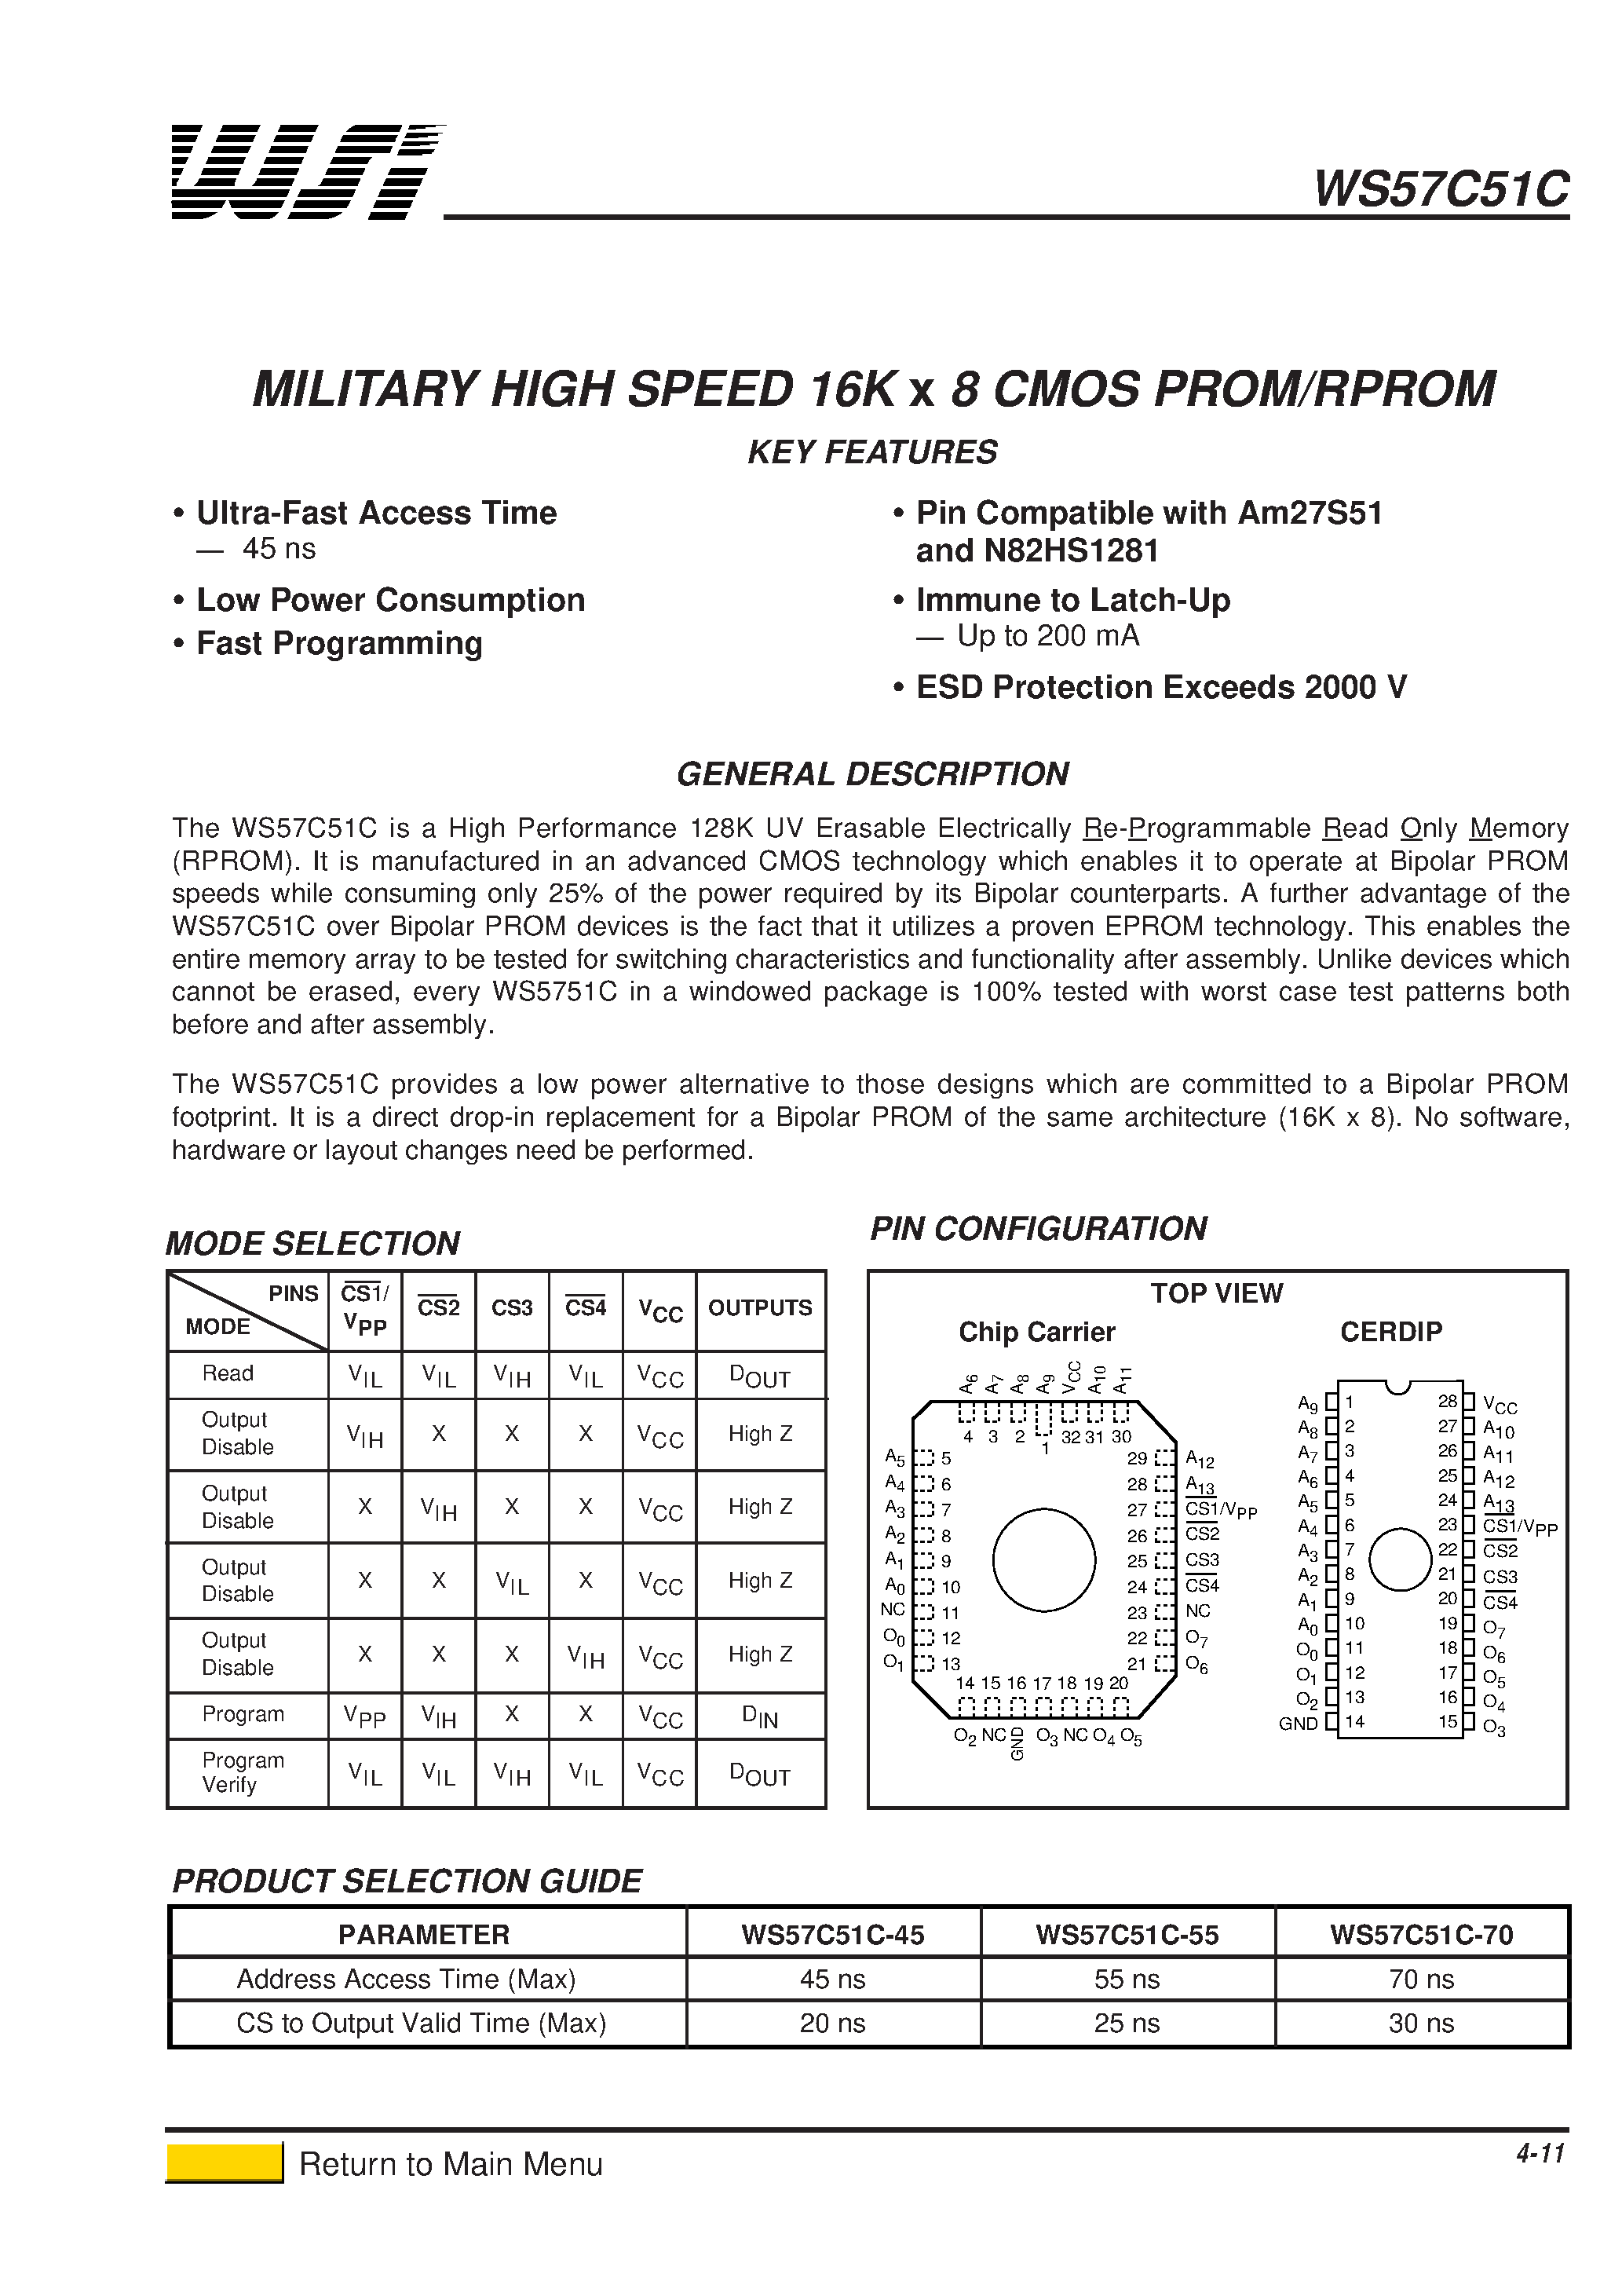 Datasheet WS57C51C-70 - MILITARY HIGH SPEED 16K x 8 CMOS PROM/RPROM page 1